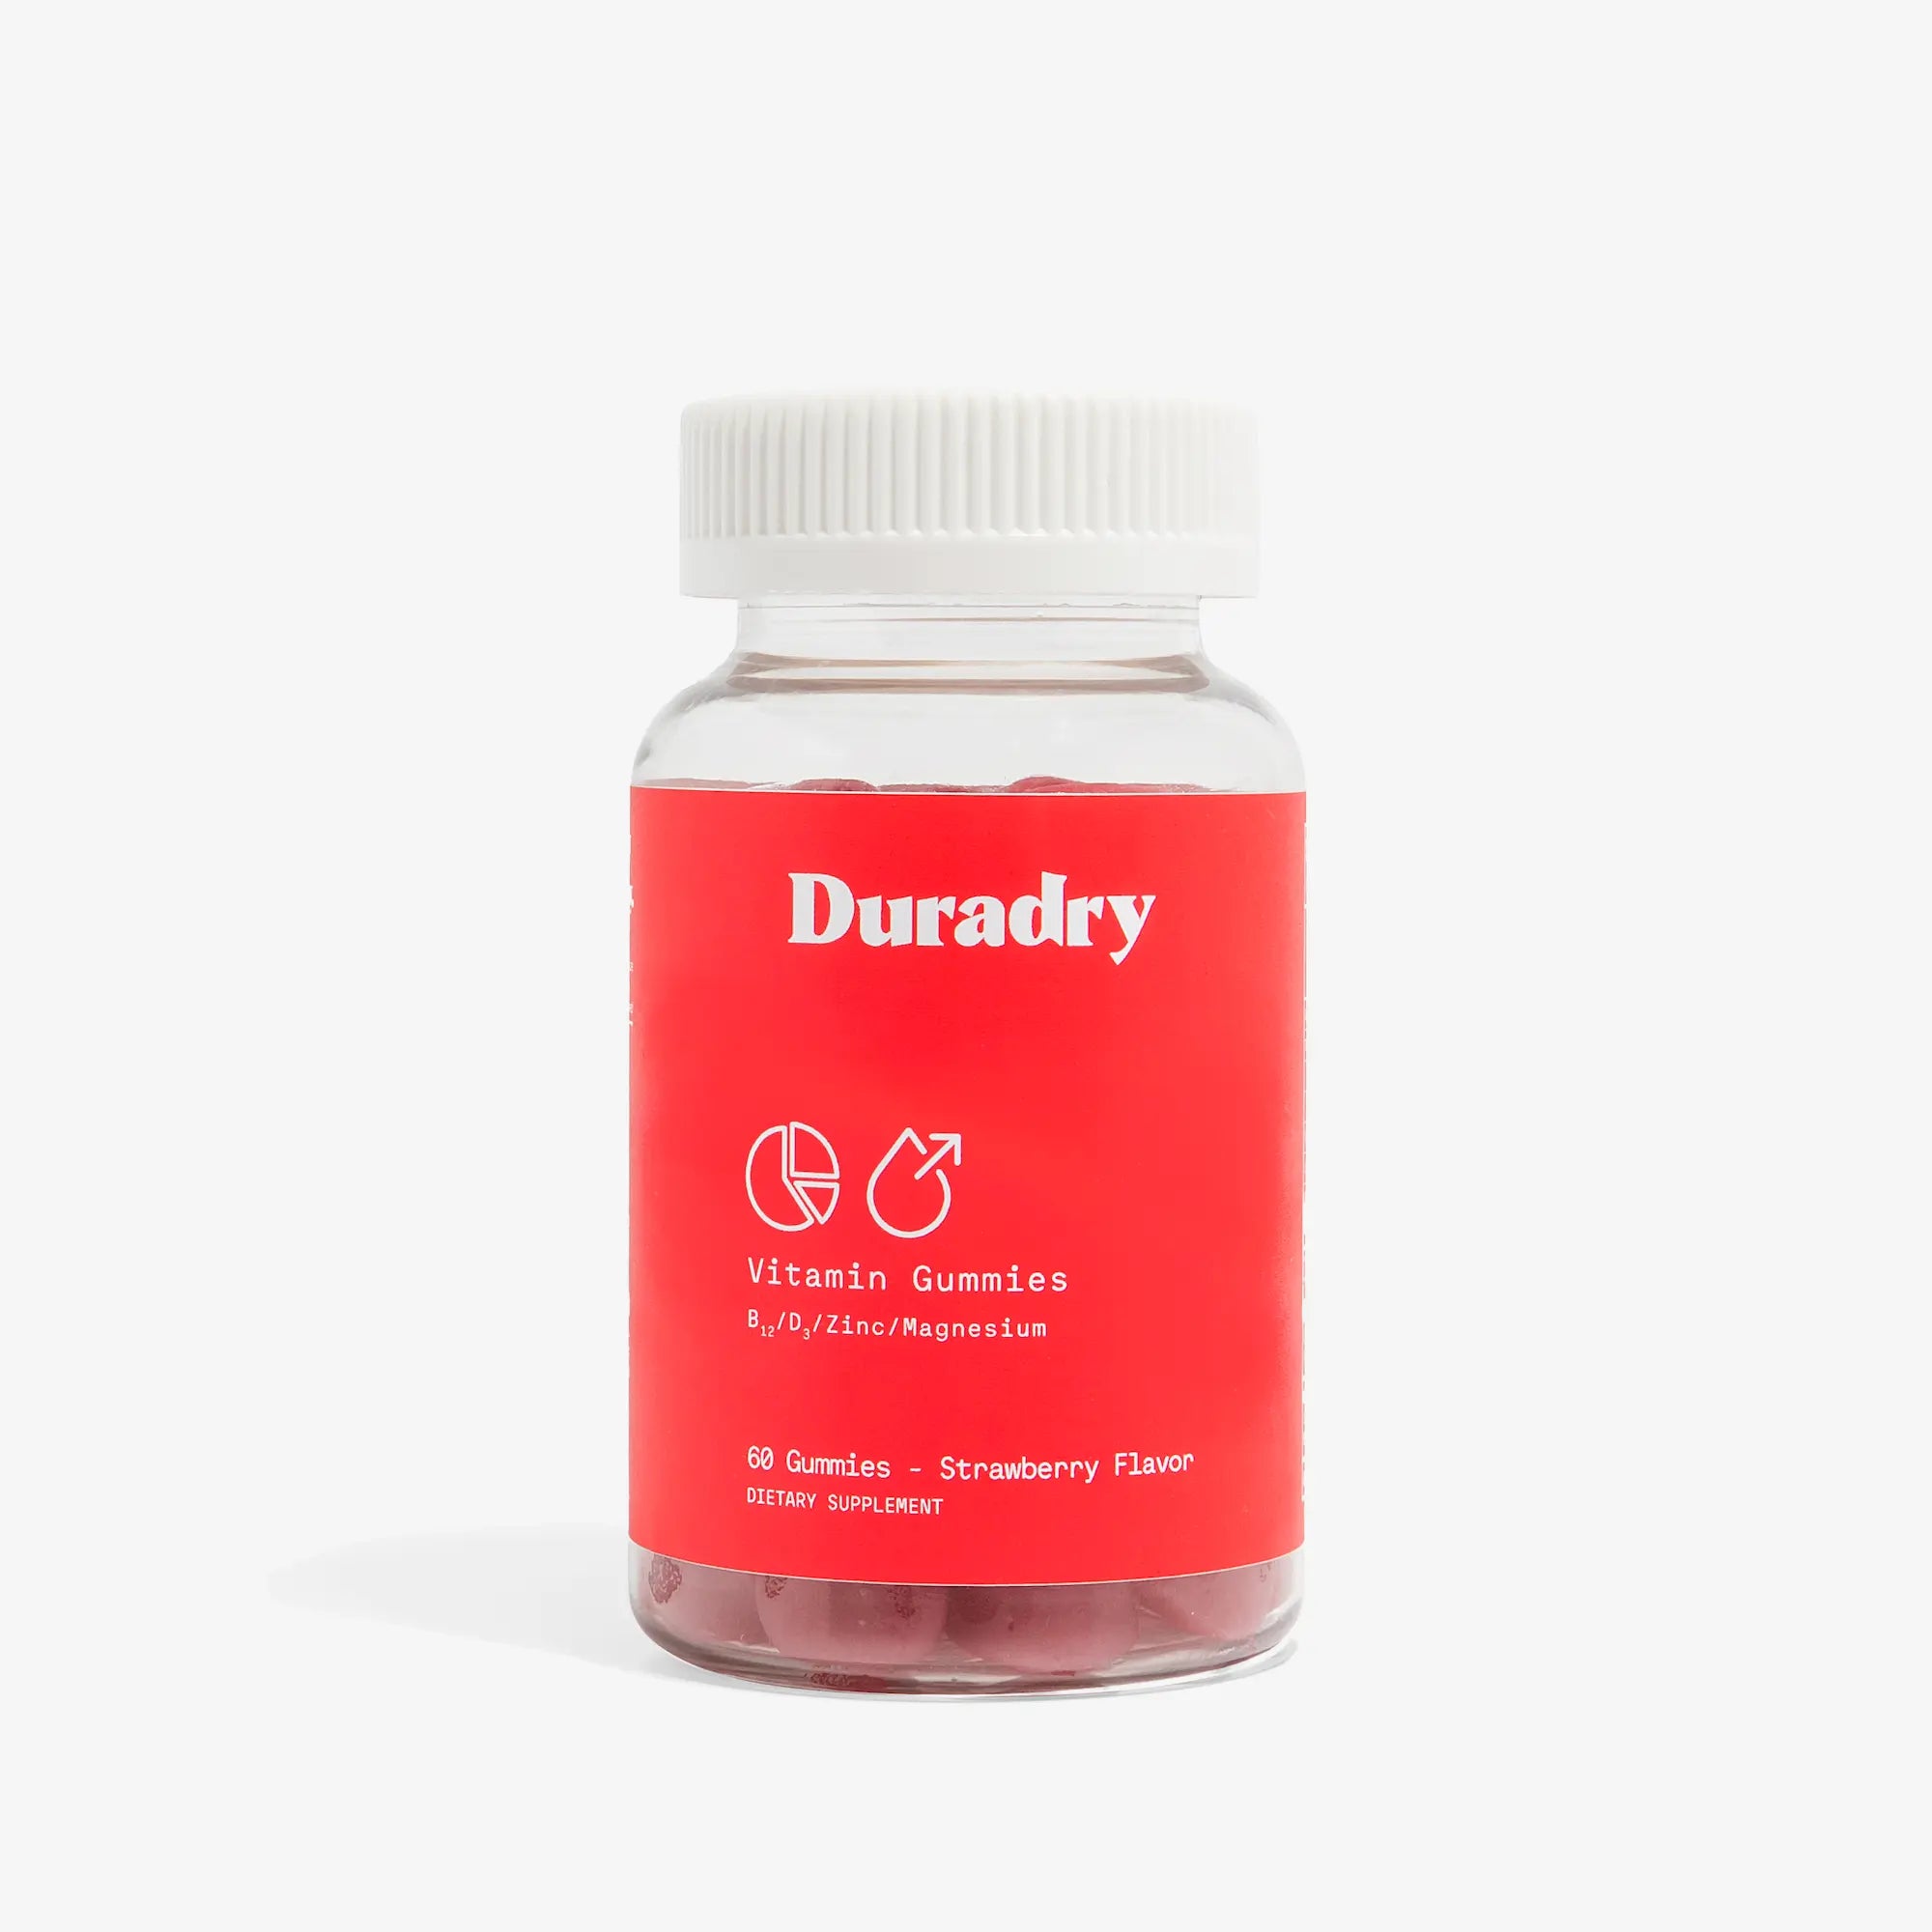 Duradry Vitamin Gummies